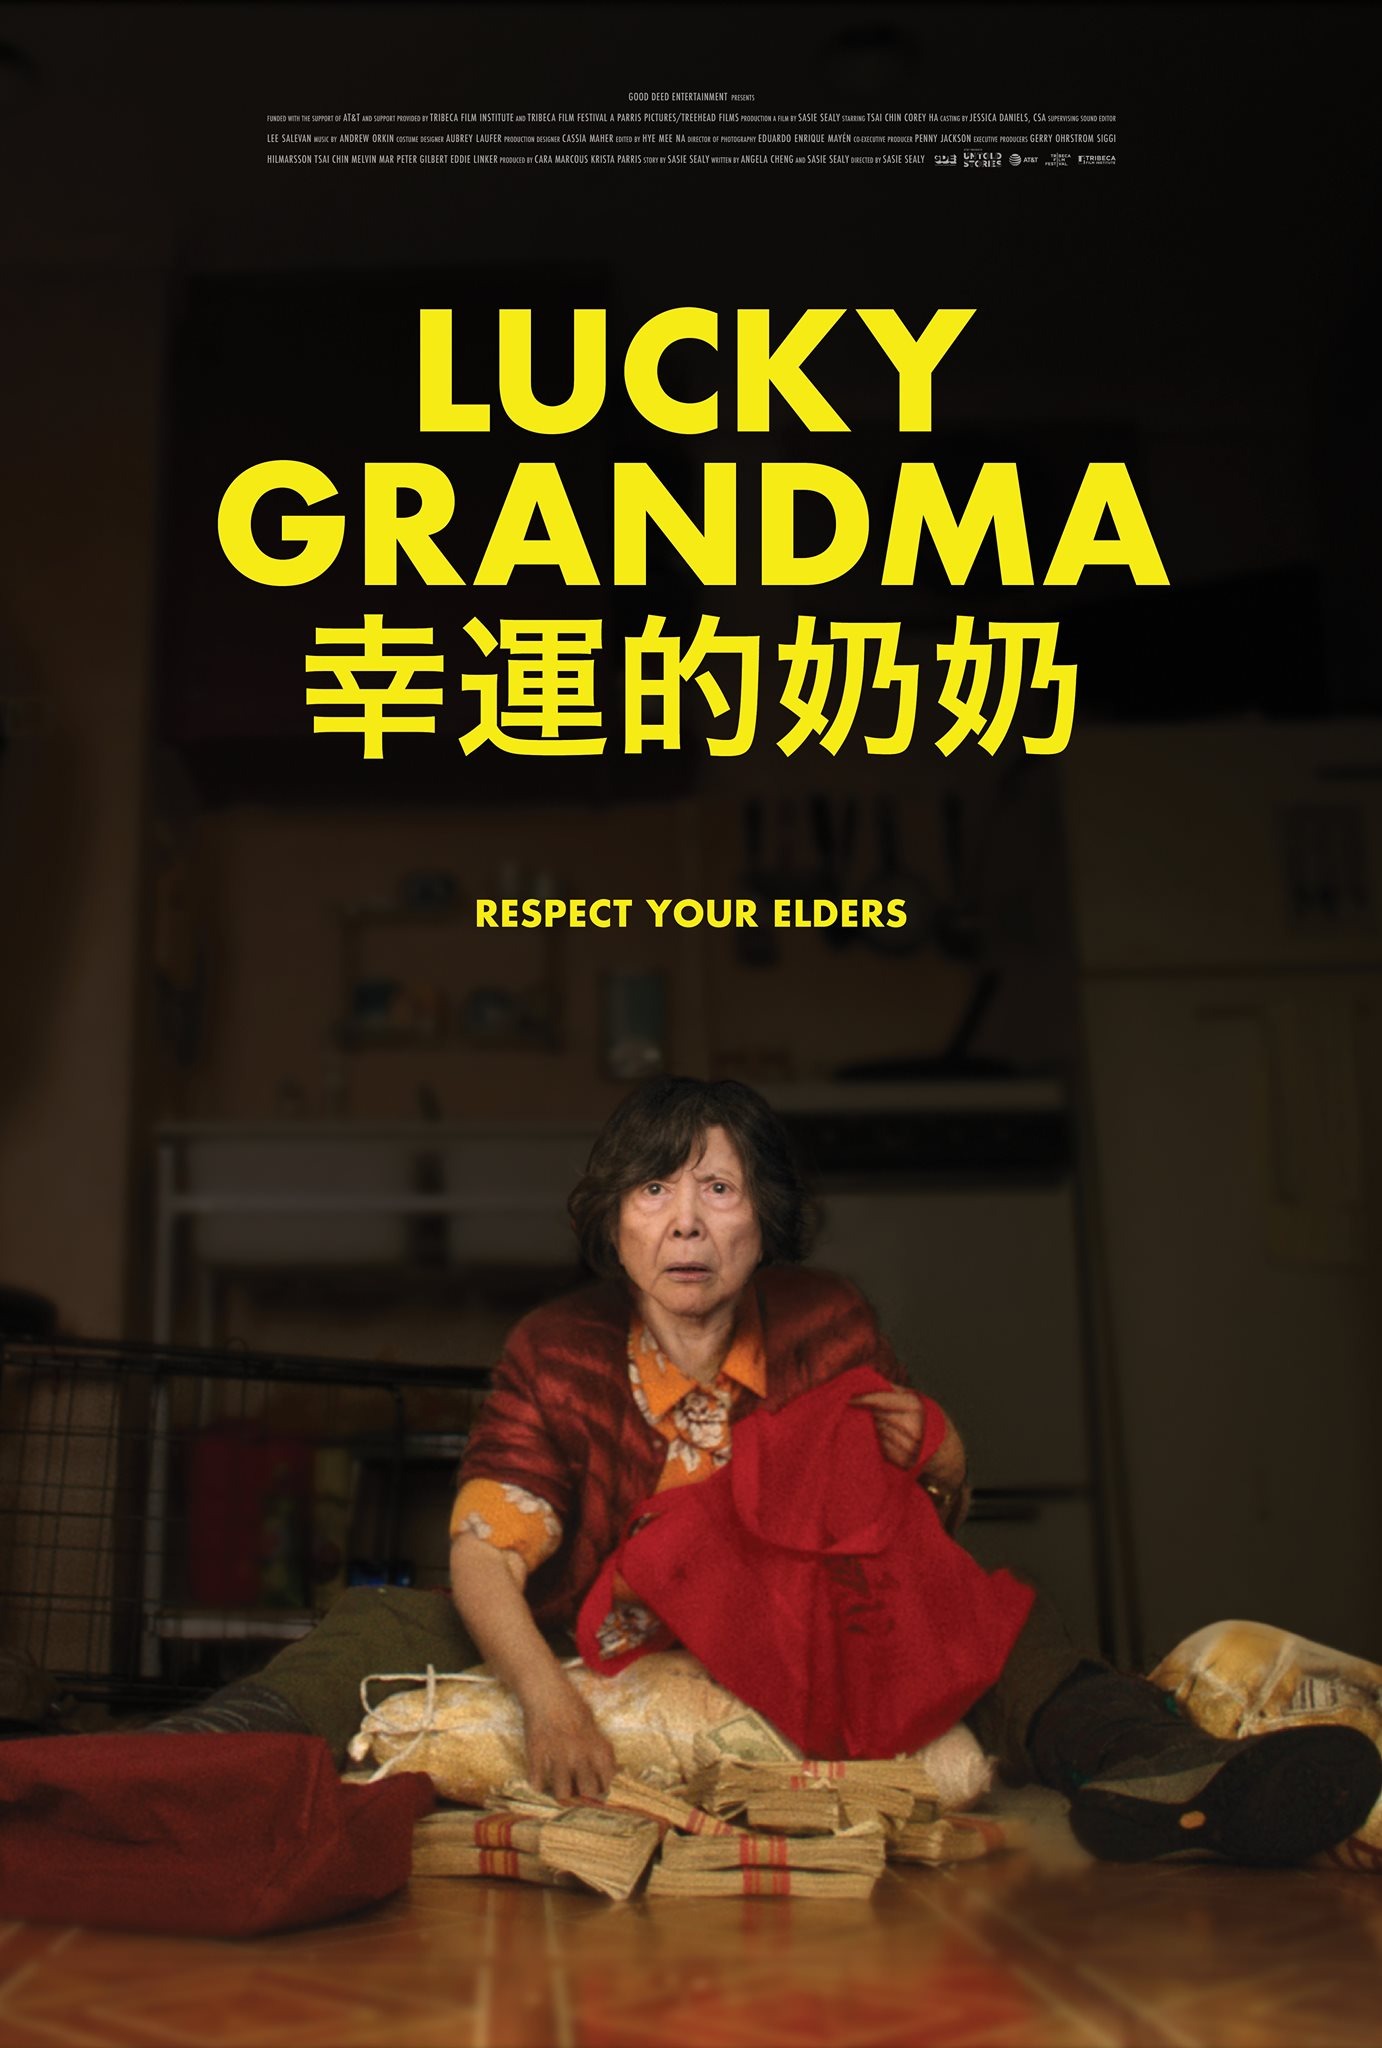 Mega Sized Movie Poster Image for Lucky Grandma 